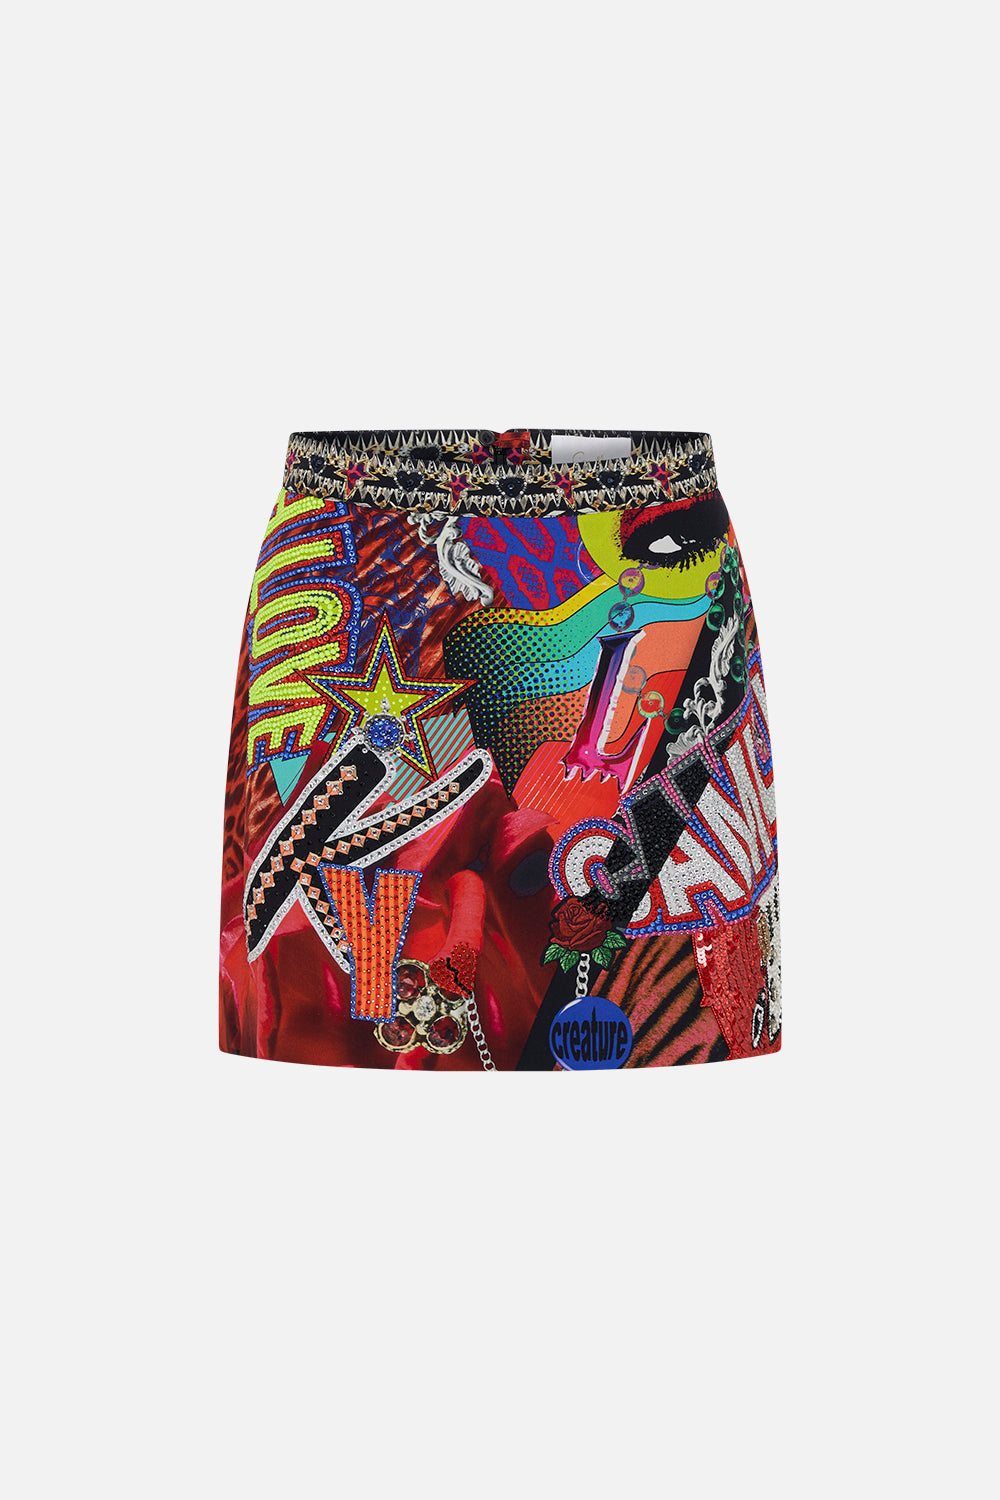 Product view CAMILLA silk mini skirt in multicoloured Radical Rebirth print